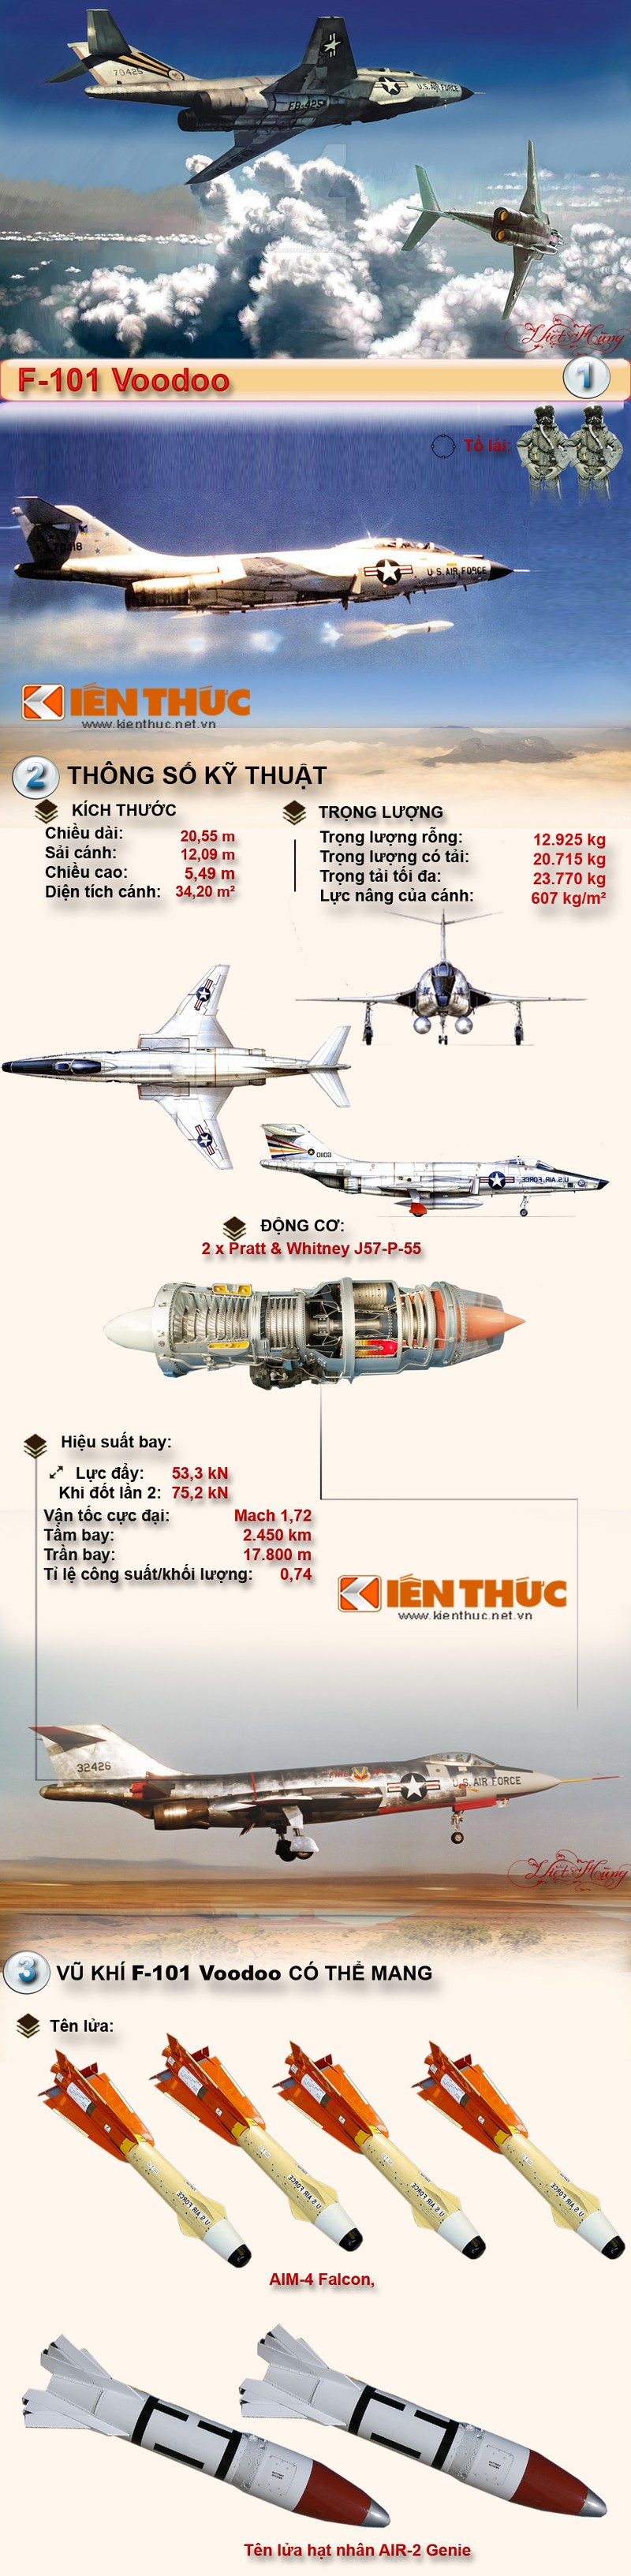 Infographic: Dong chien dau co the ky bai tran o Viet Nam (2)